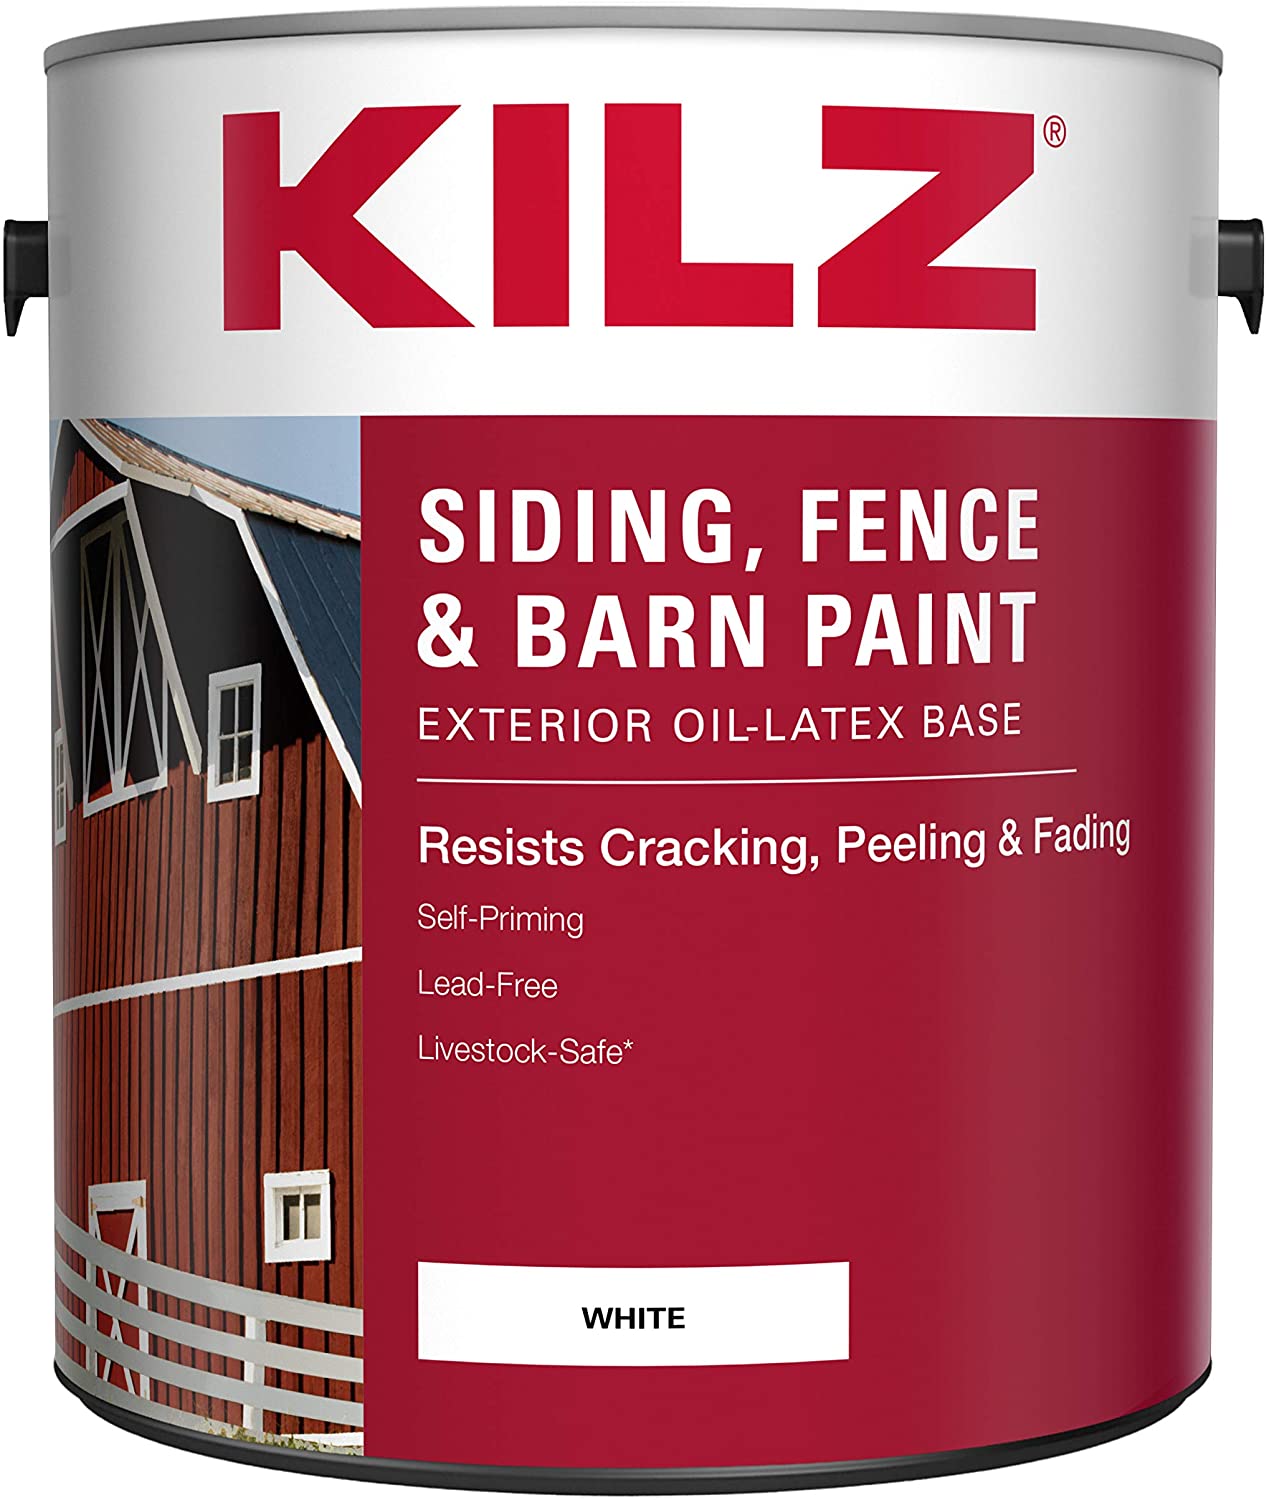 KILZ Exterior Siding, Fence, and Barn Paint, White, 1-gallon